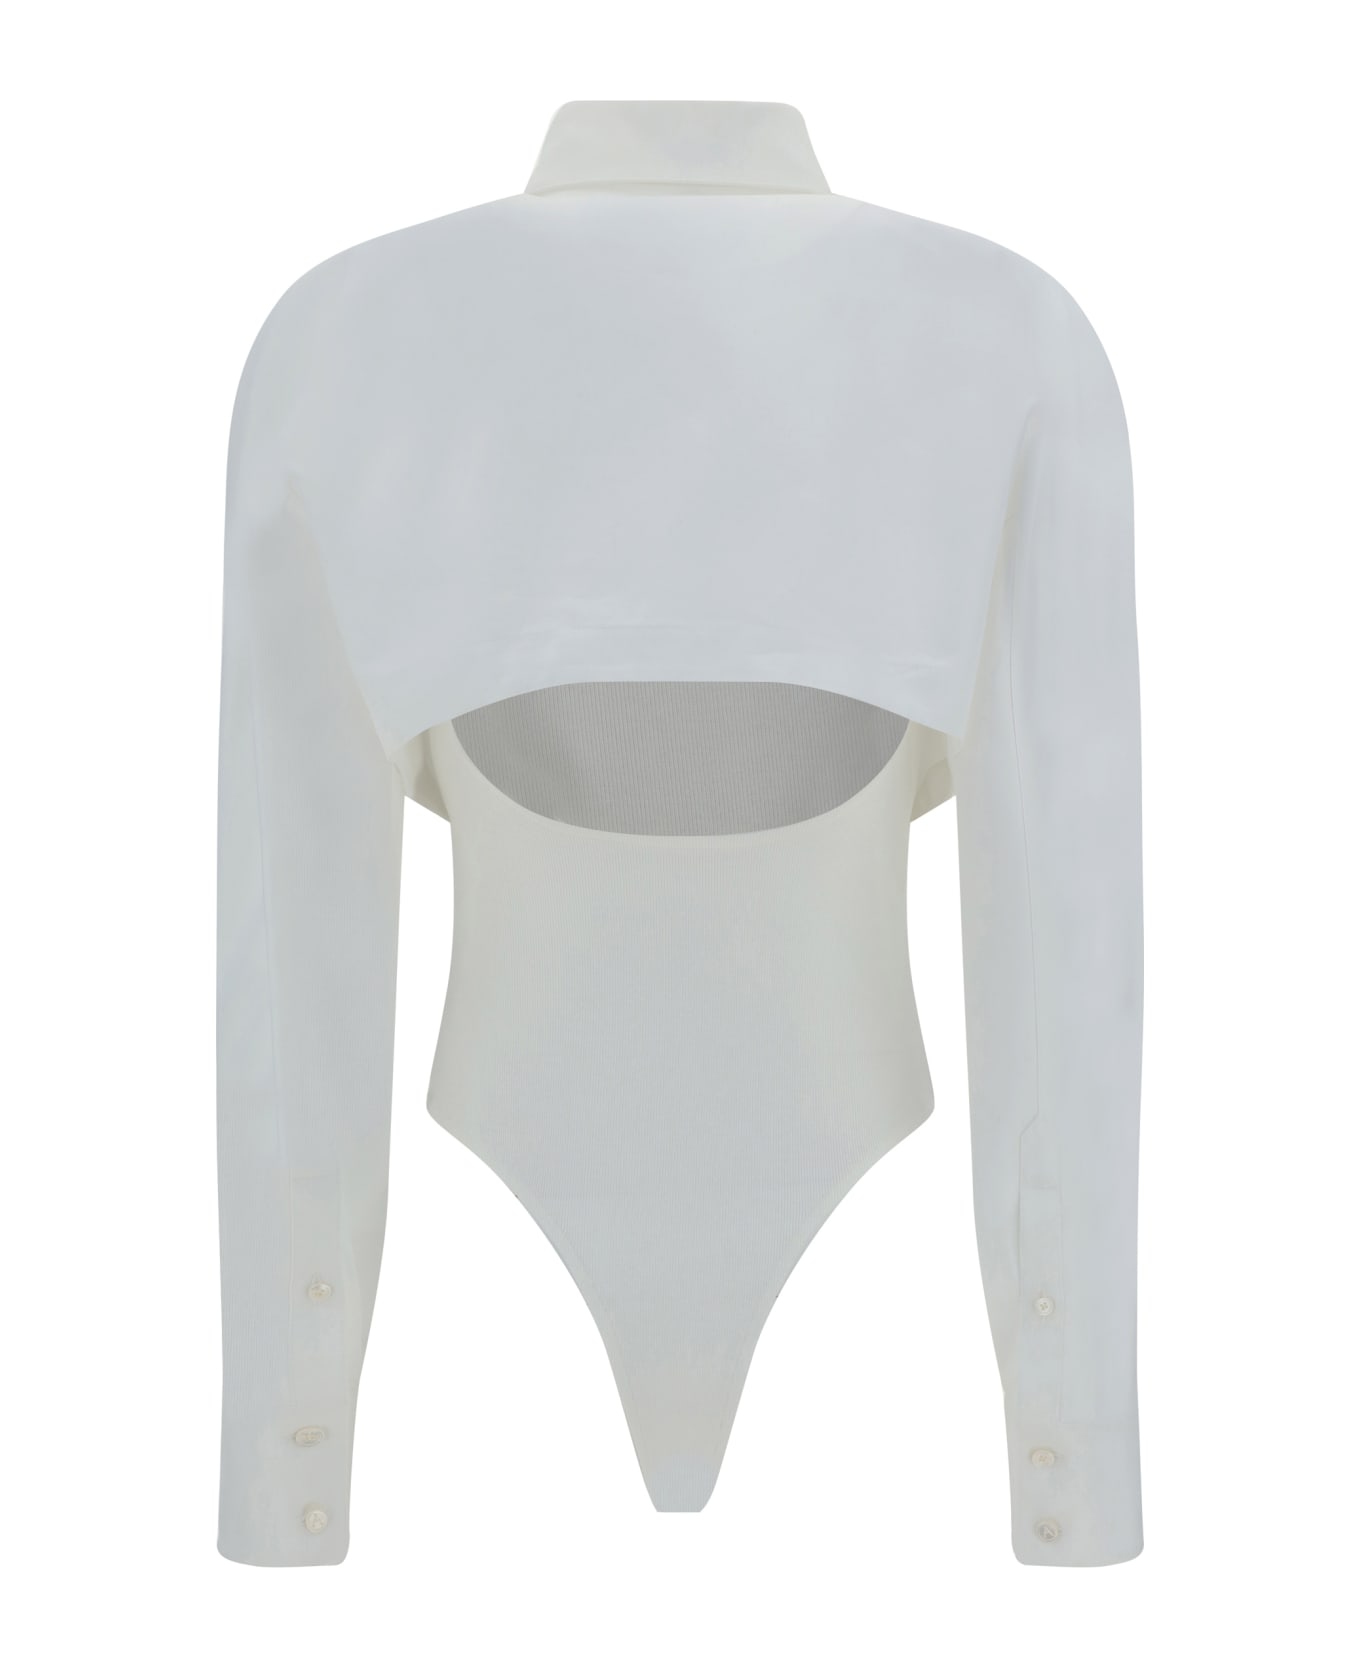 Alaia Body Shirt - Blanc